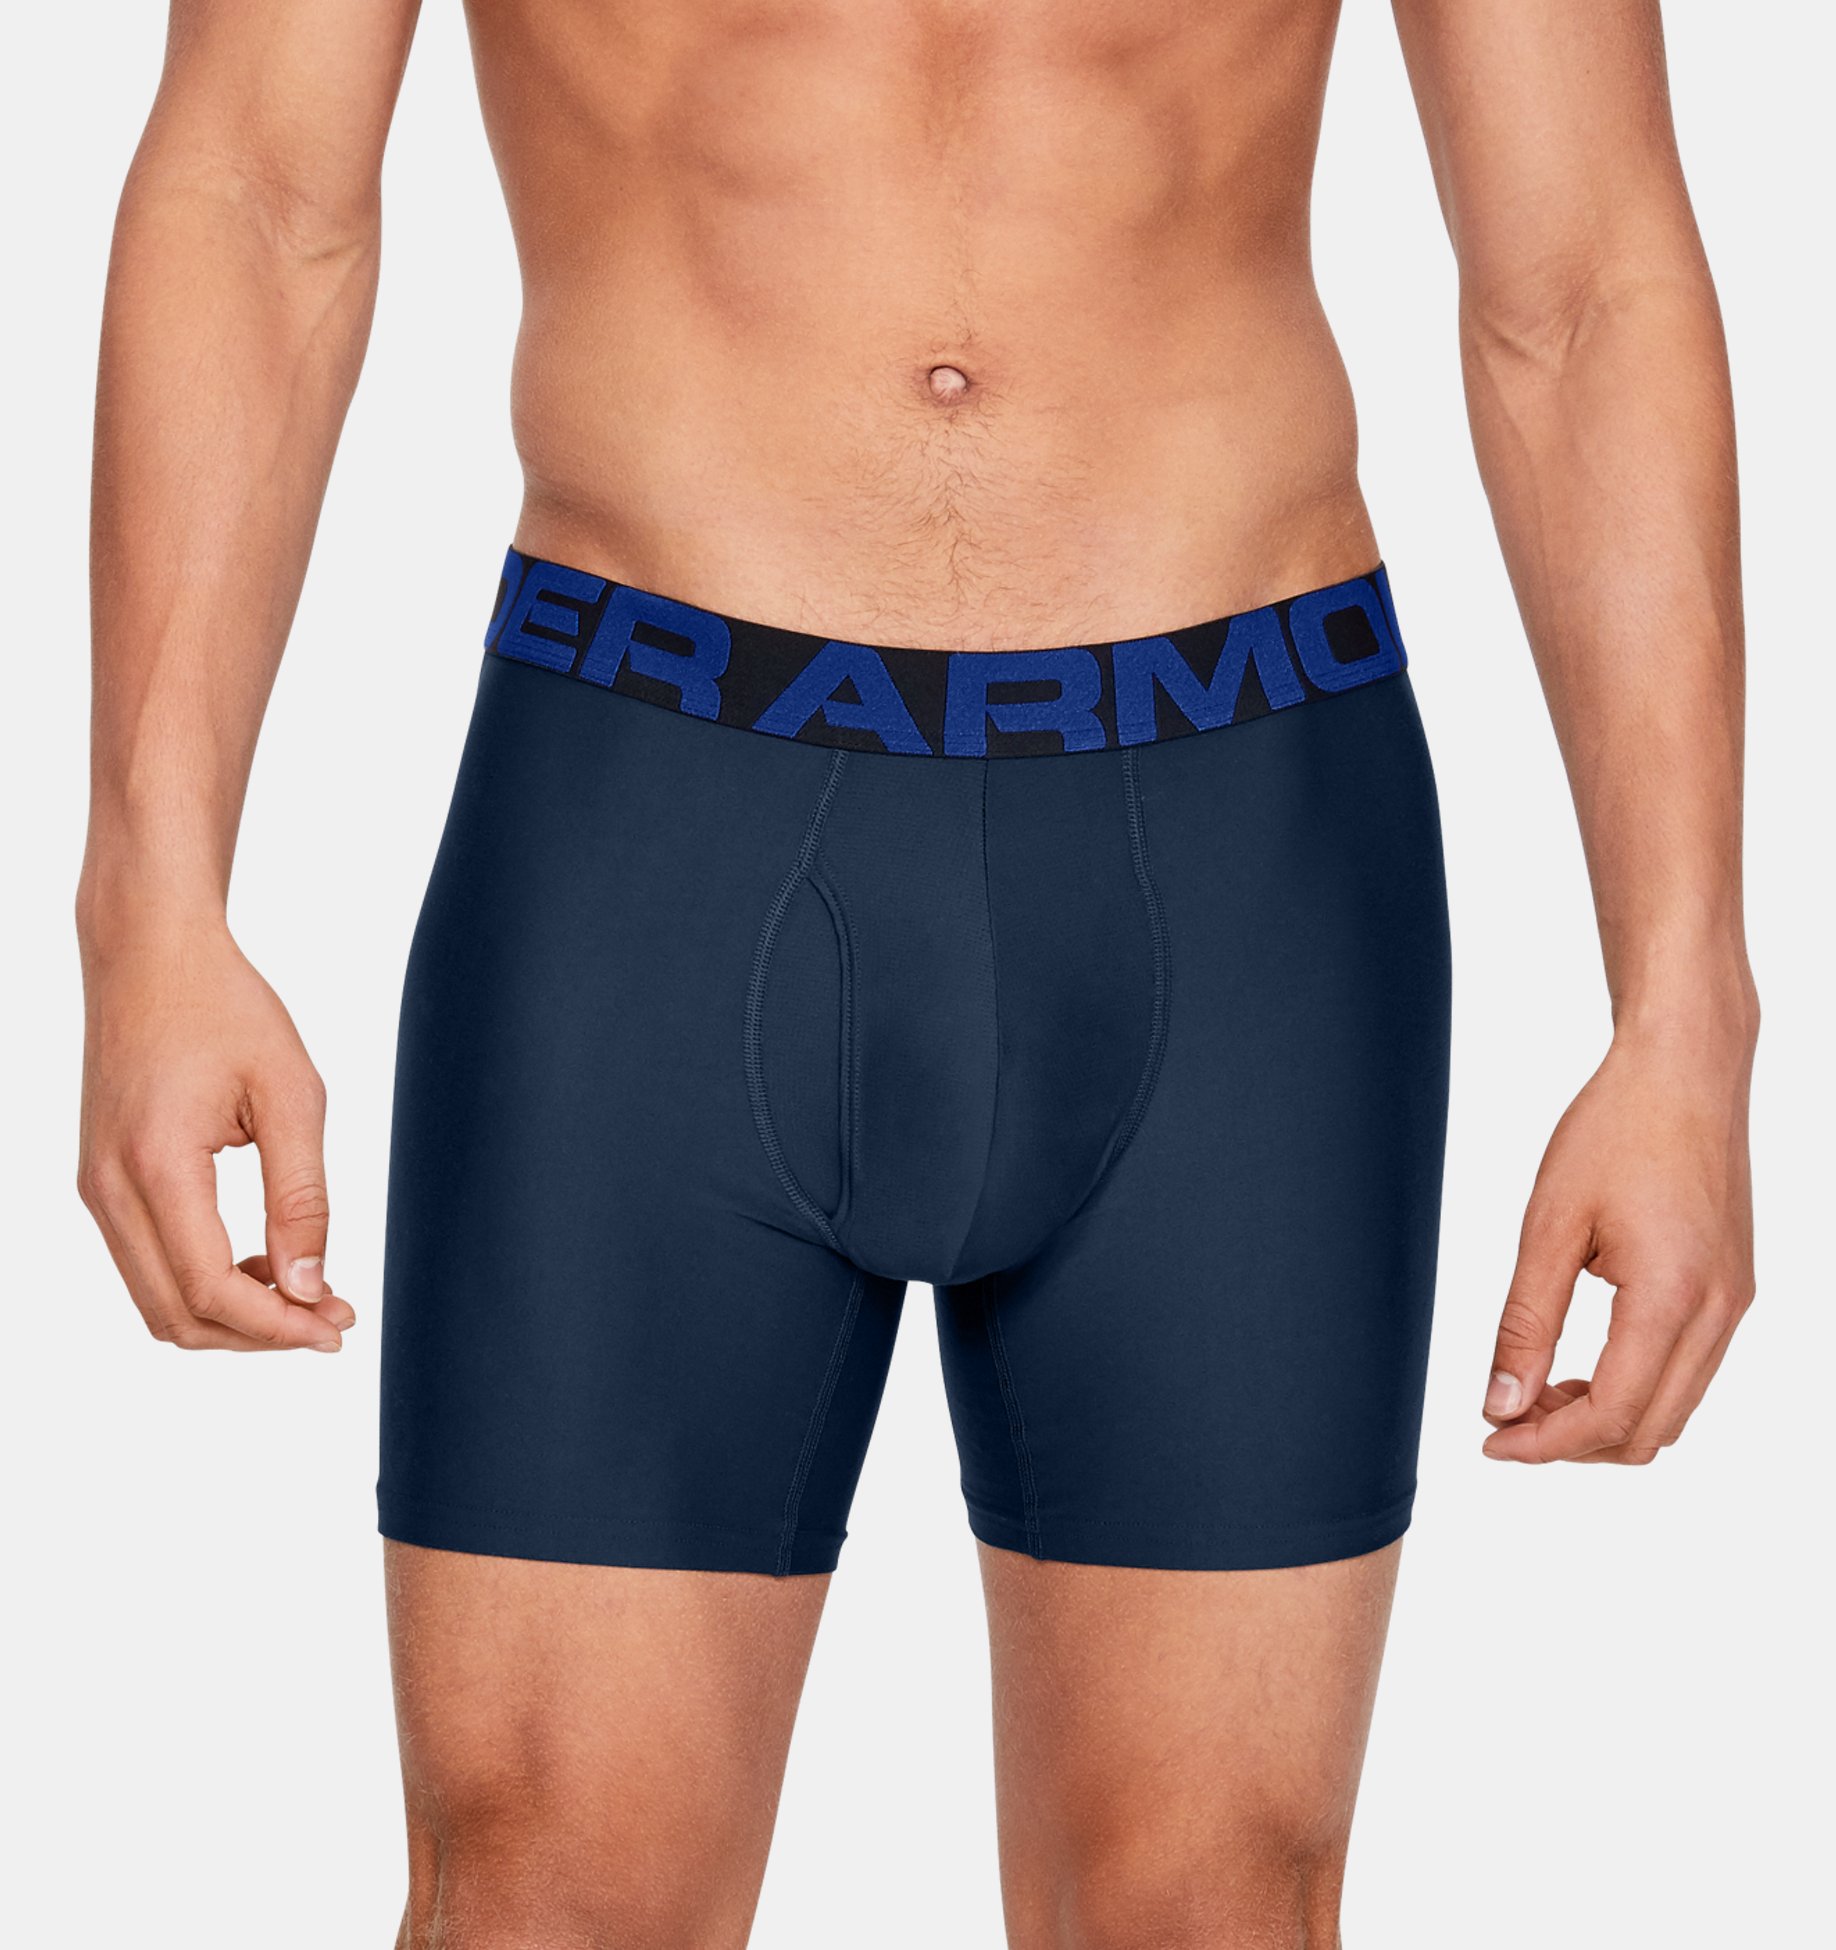 Mens Boxer Shorts Sports Underwear Small Medium Large XL XXL Pack of 3,6,9,12 